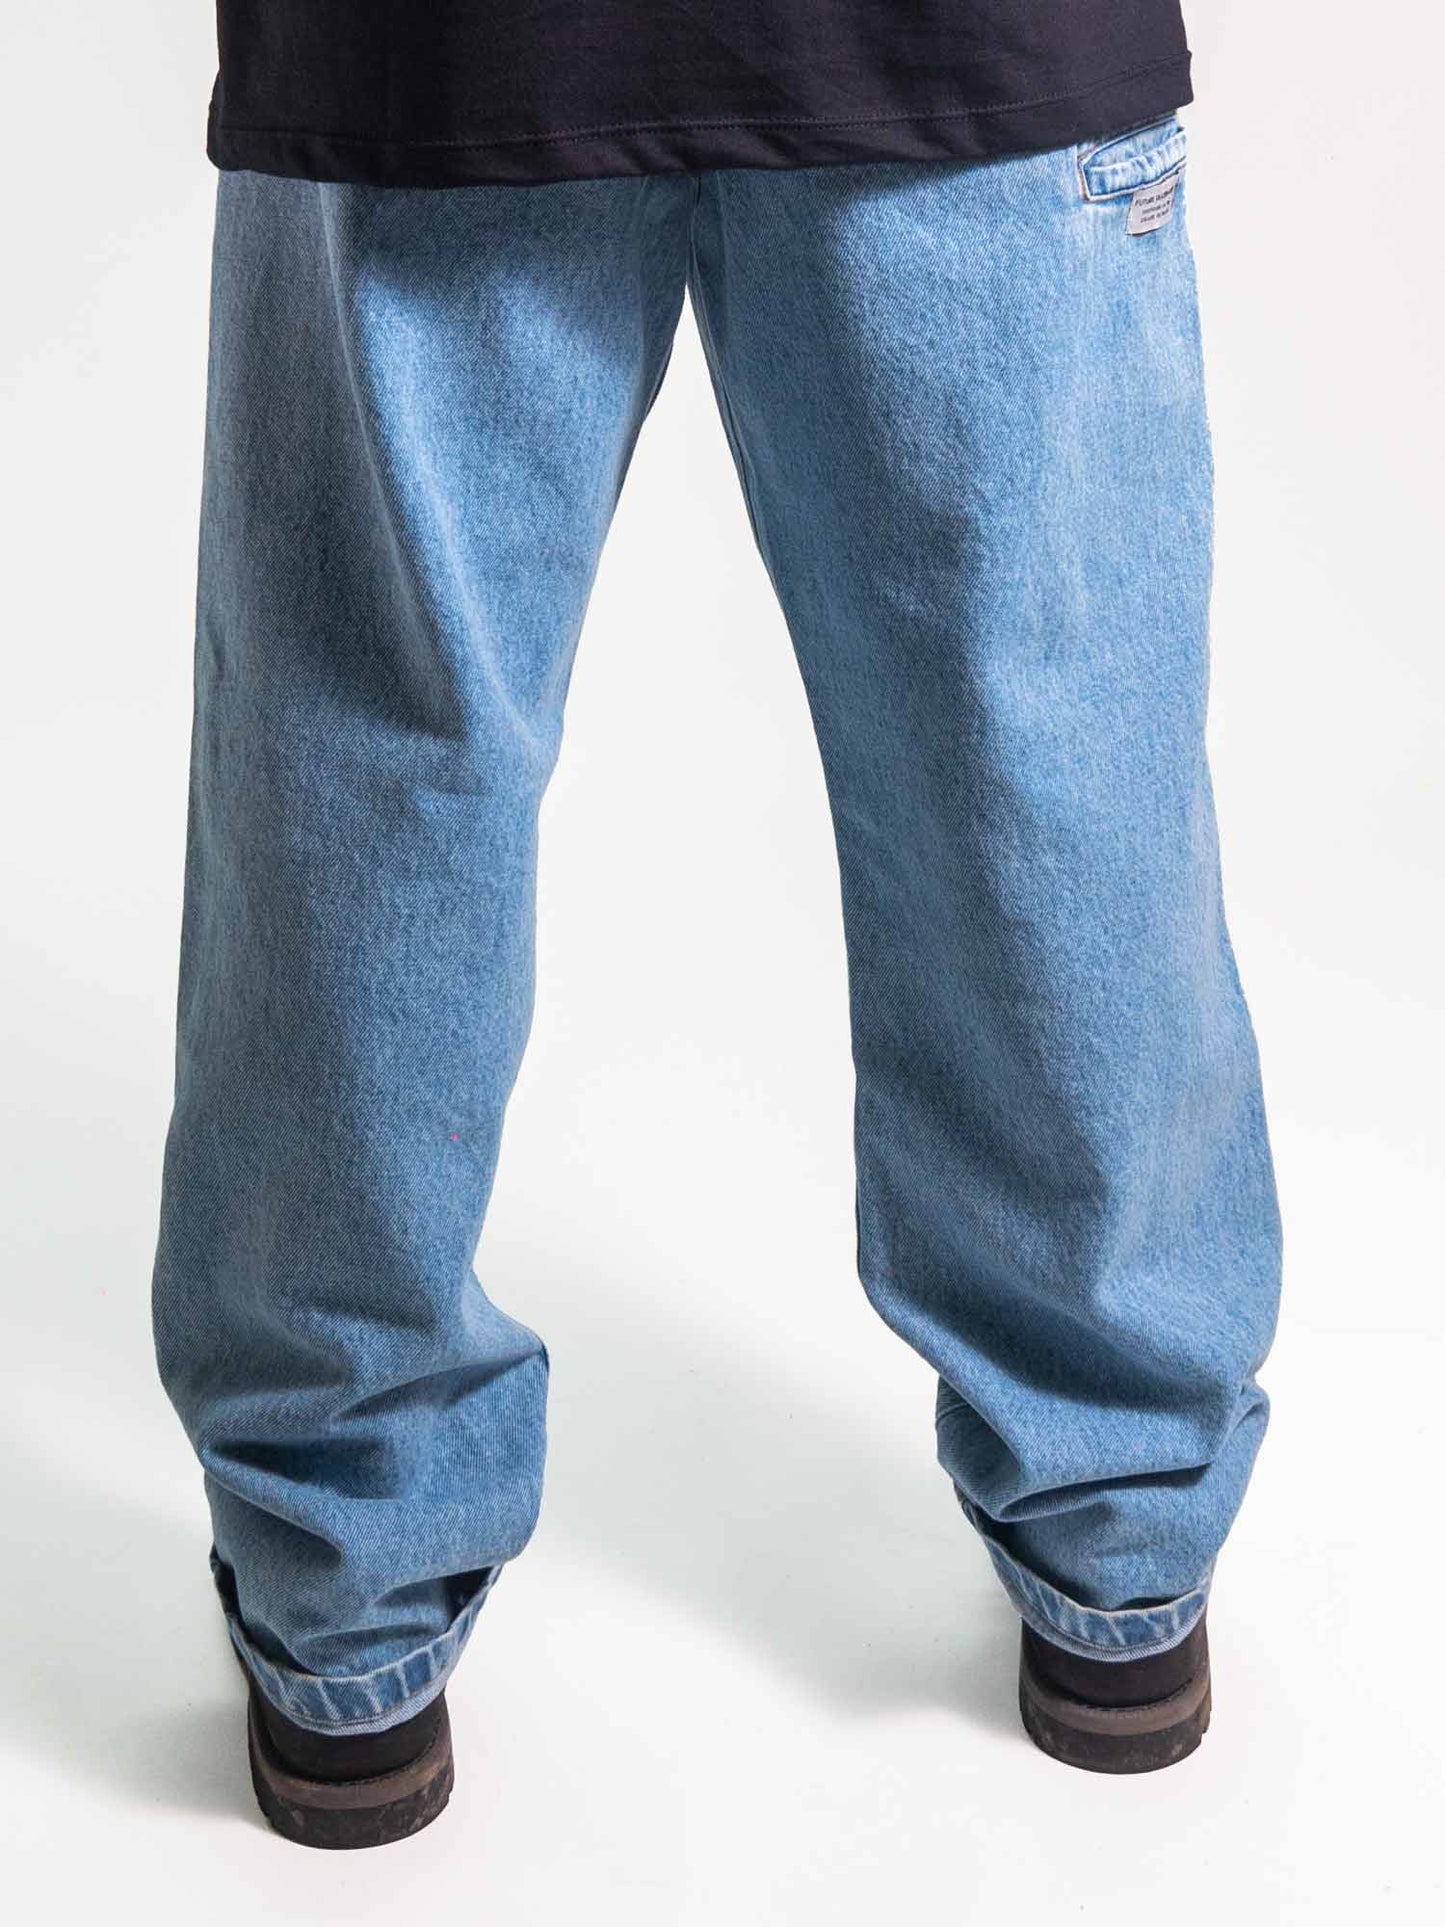     Calca-Future-Jeans-93_Gs-Azul-Costas-Corpo